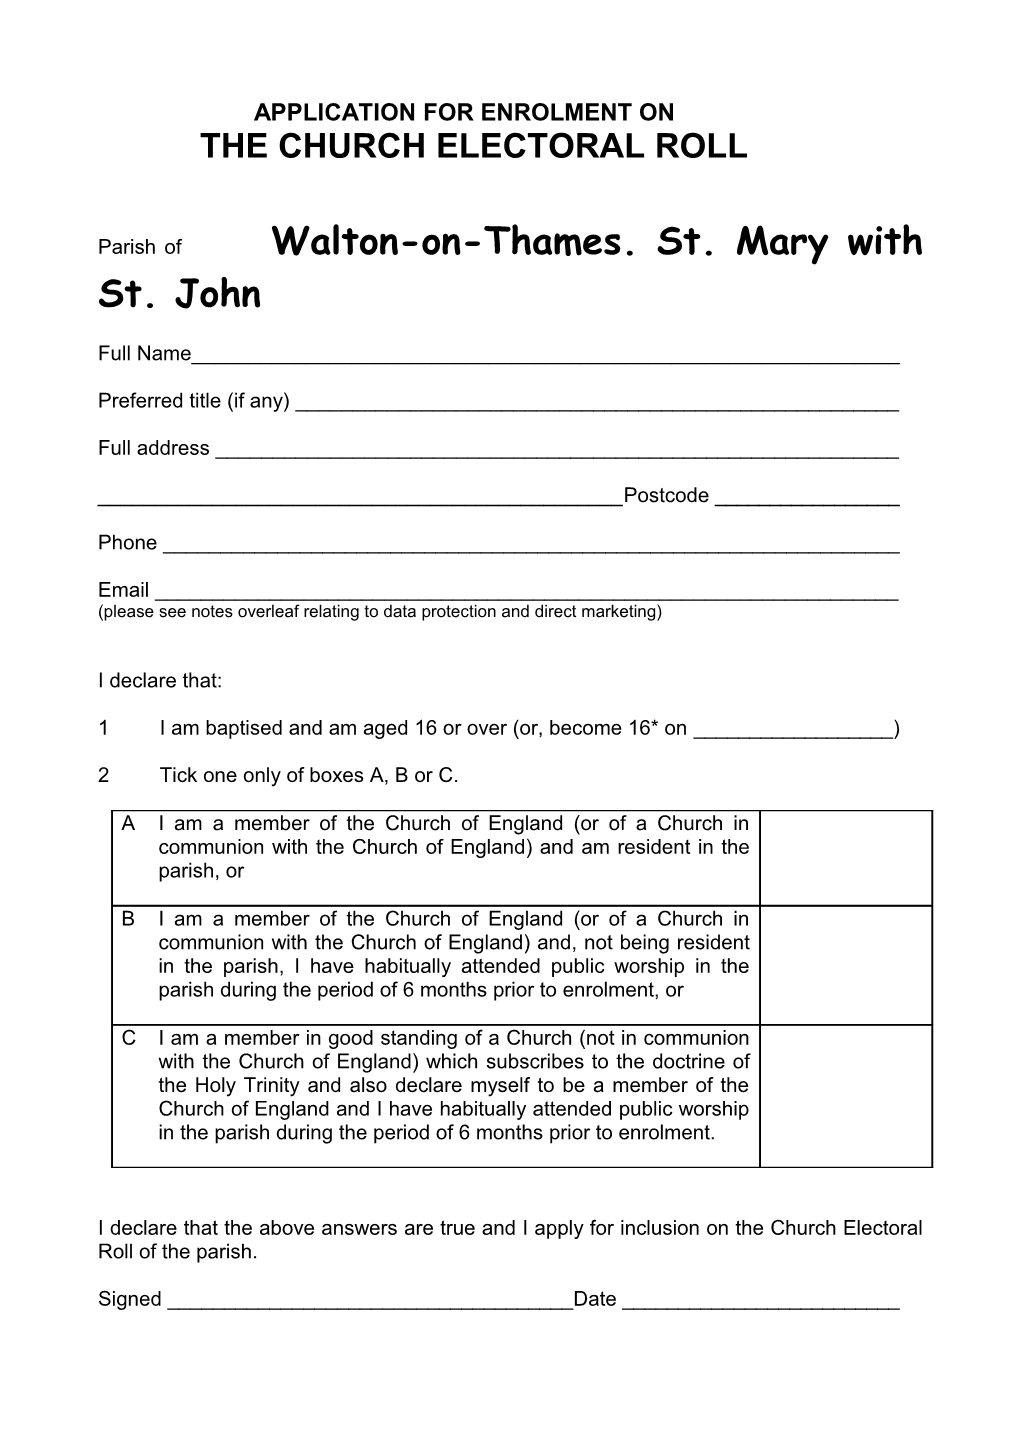 Application for Enrolment on the Church Electoral Roll